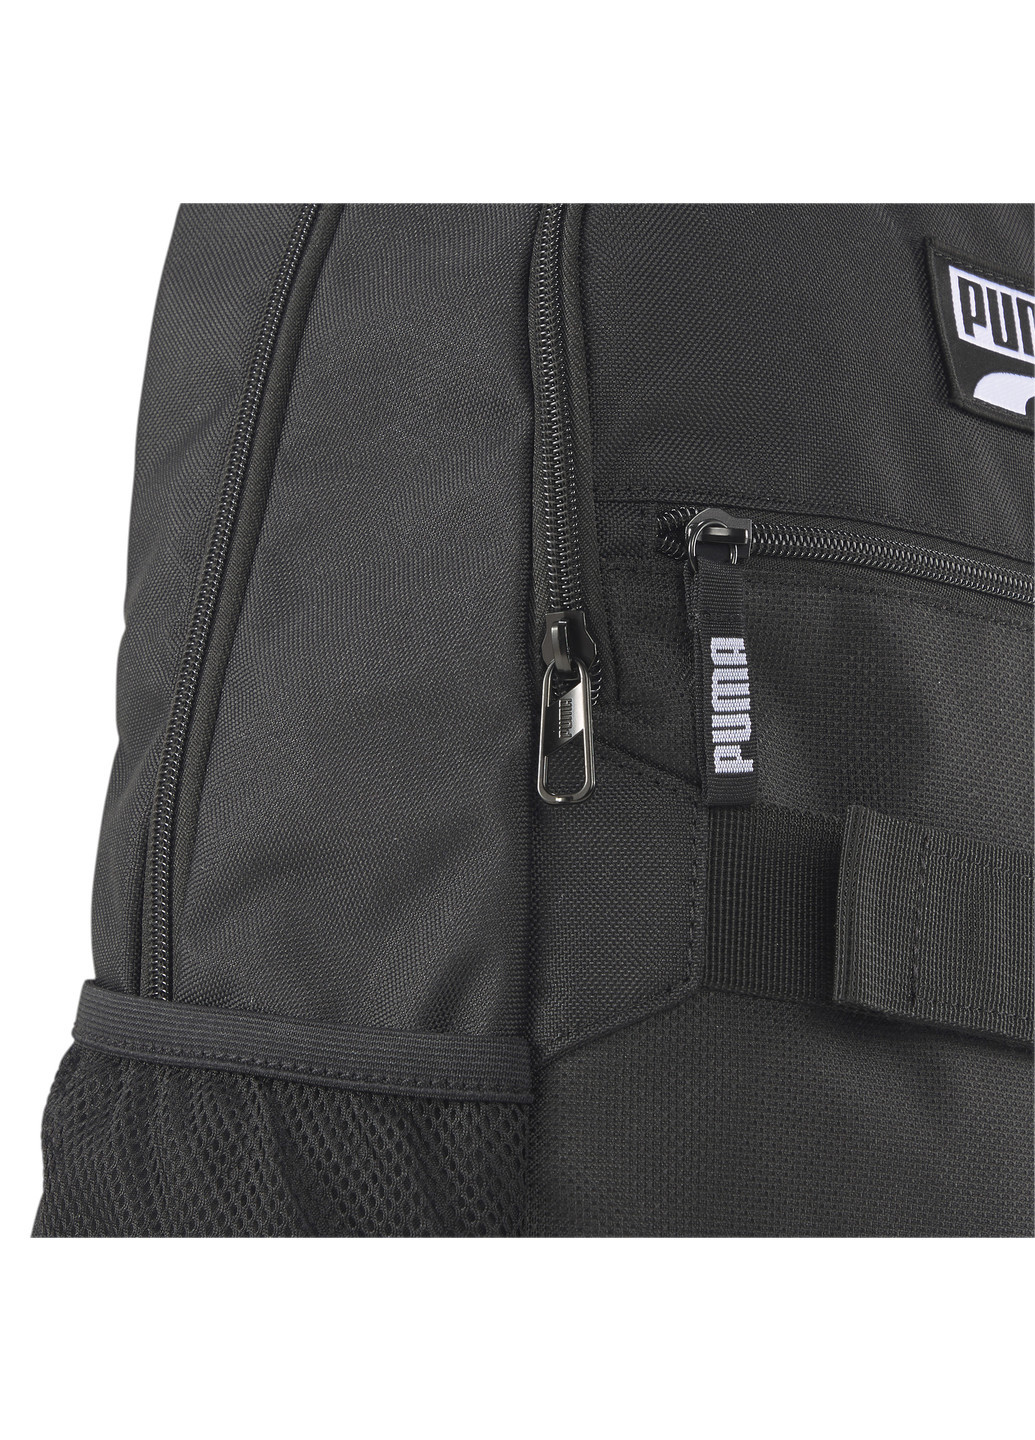 Рюкзак Puma Deck Backpack чёрный